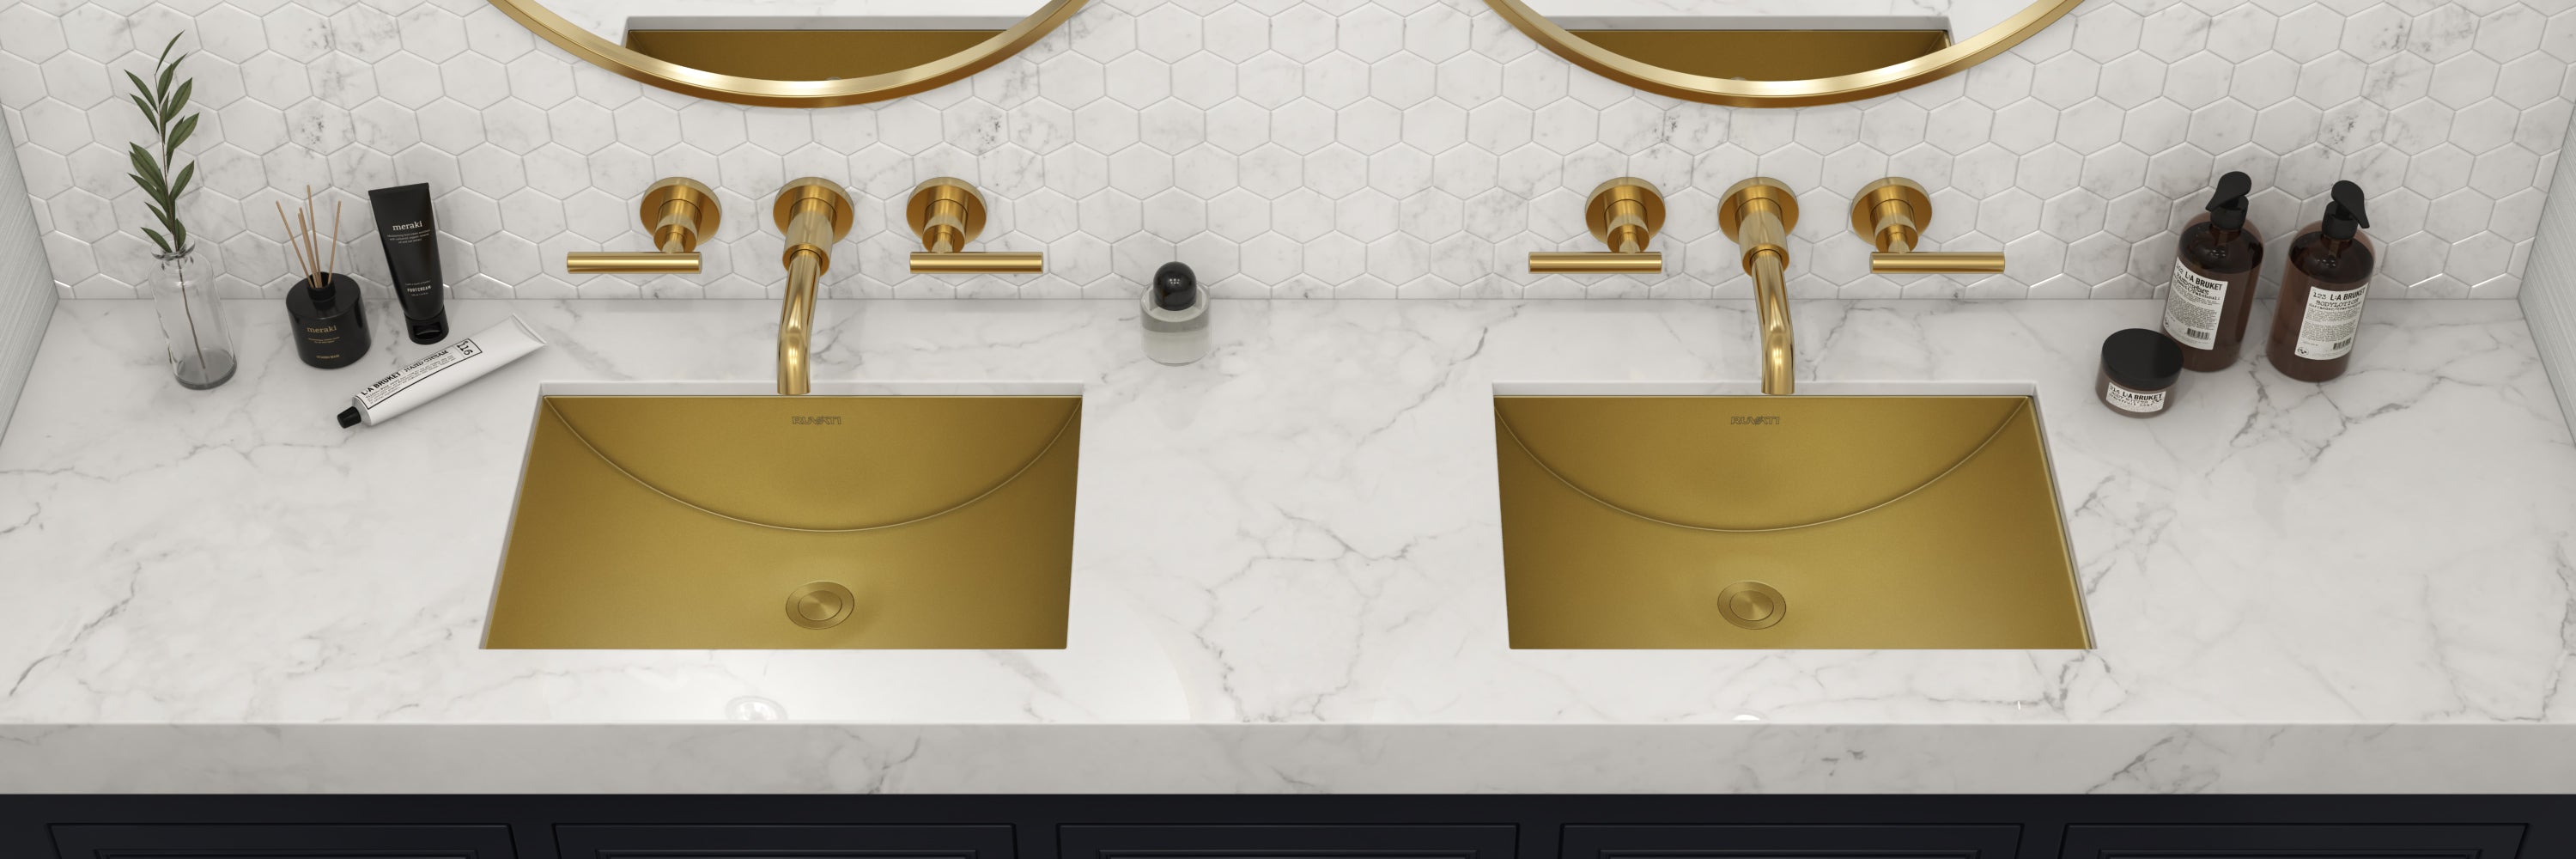 Ruvati 20" x 14" Undermount Brushed Gold Rectangular Stainless Steel Bathroom Sink